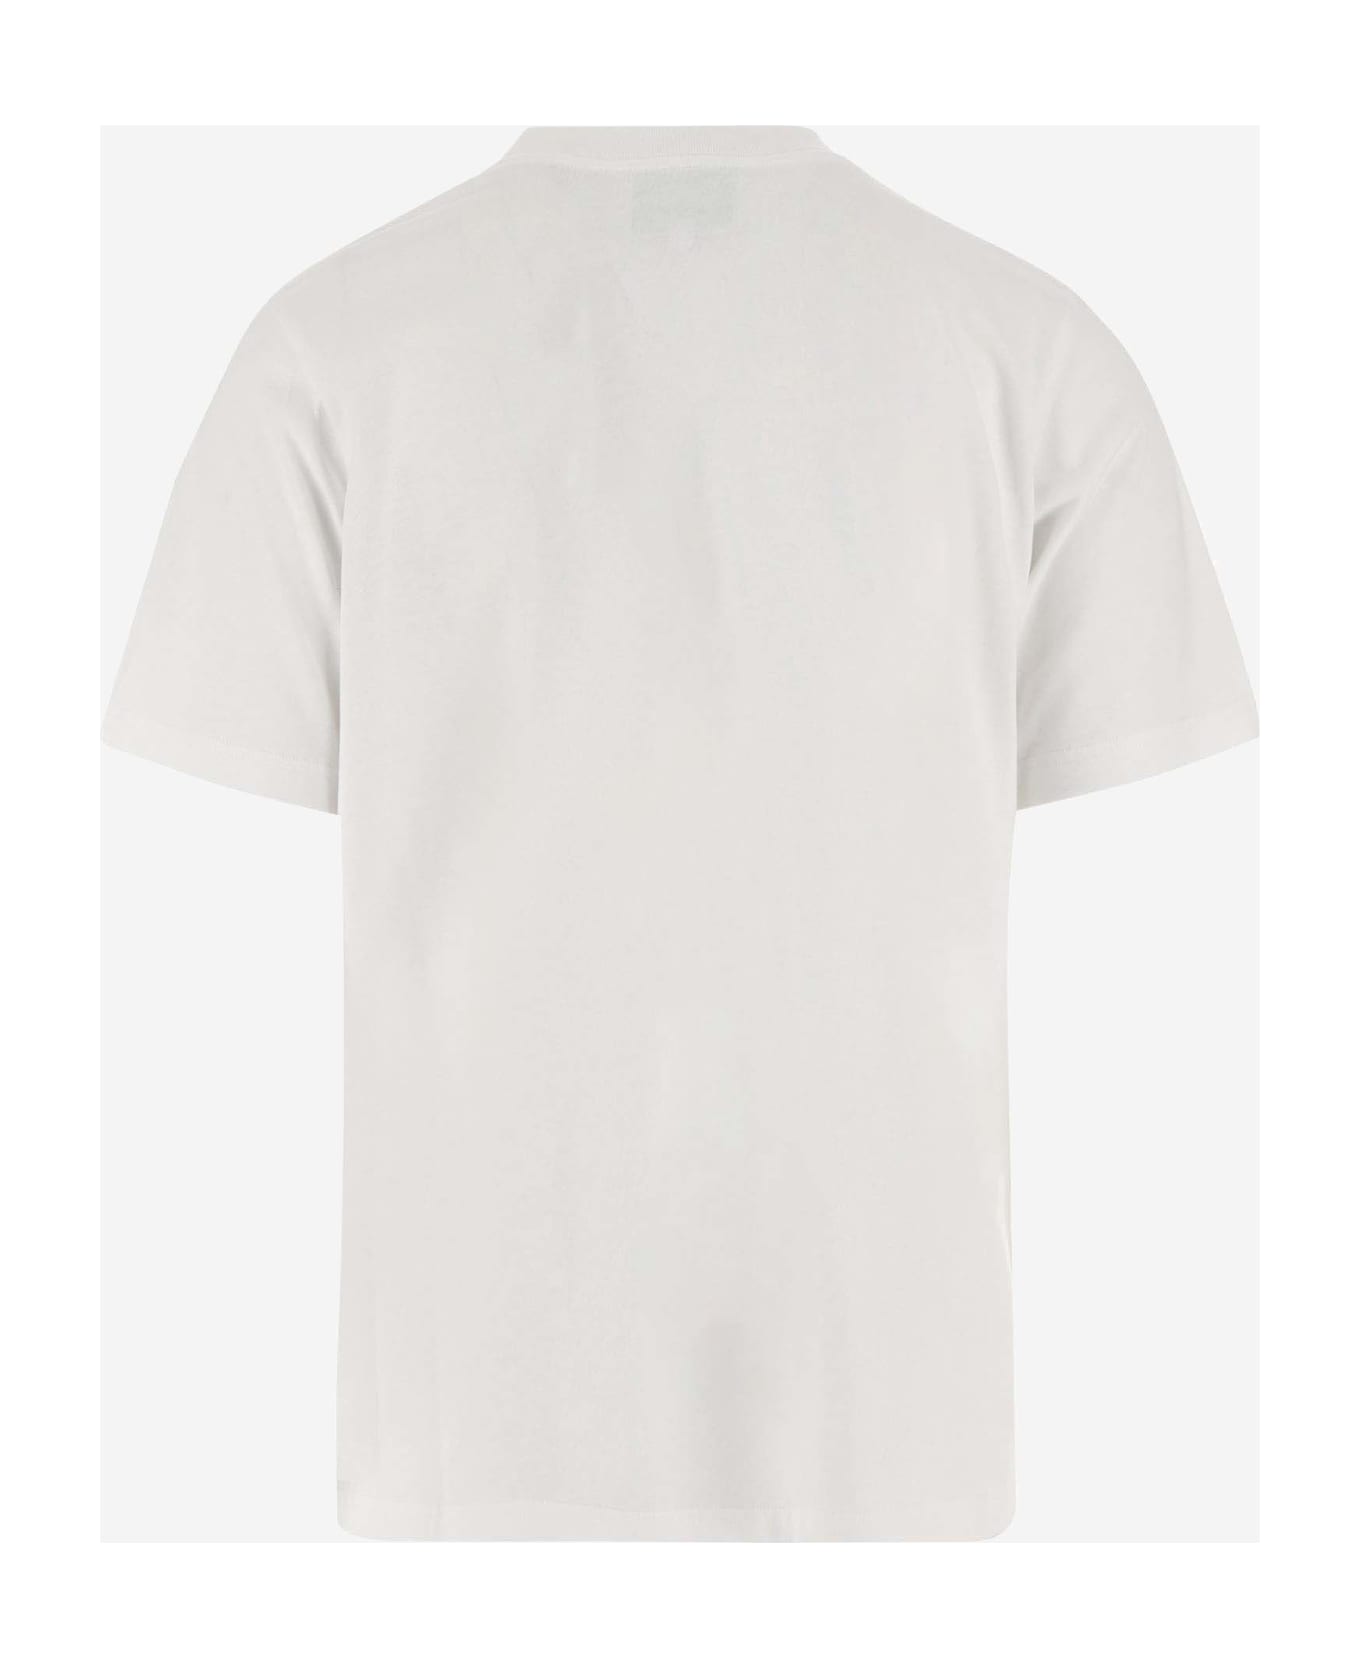 Casablanca T-shirt Afro Cubism Tennis Club - WHITE